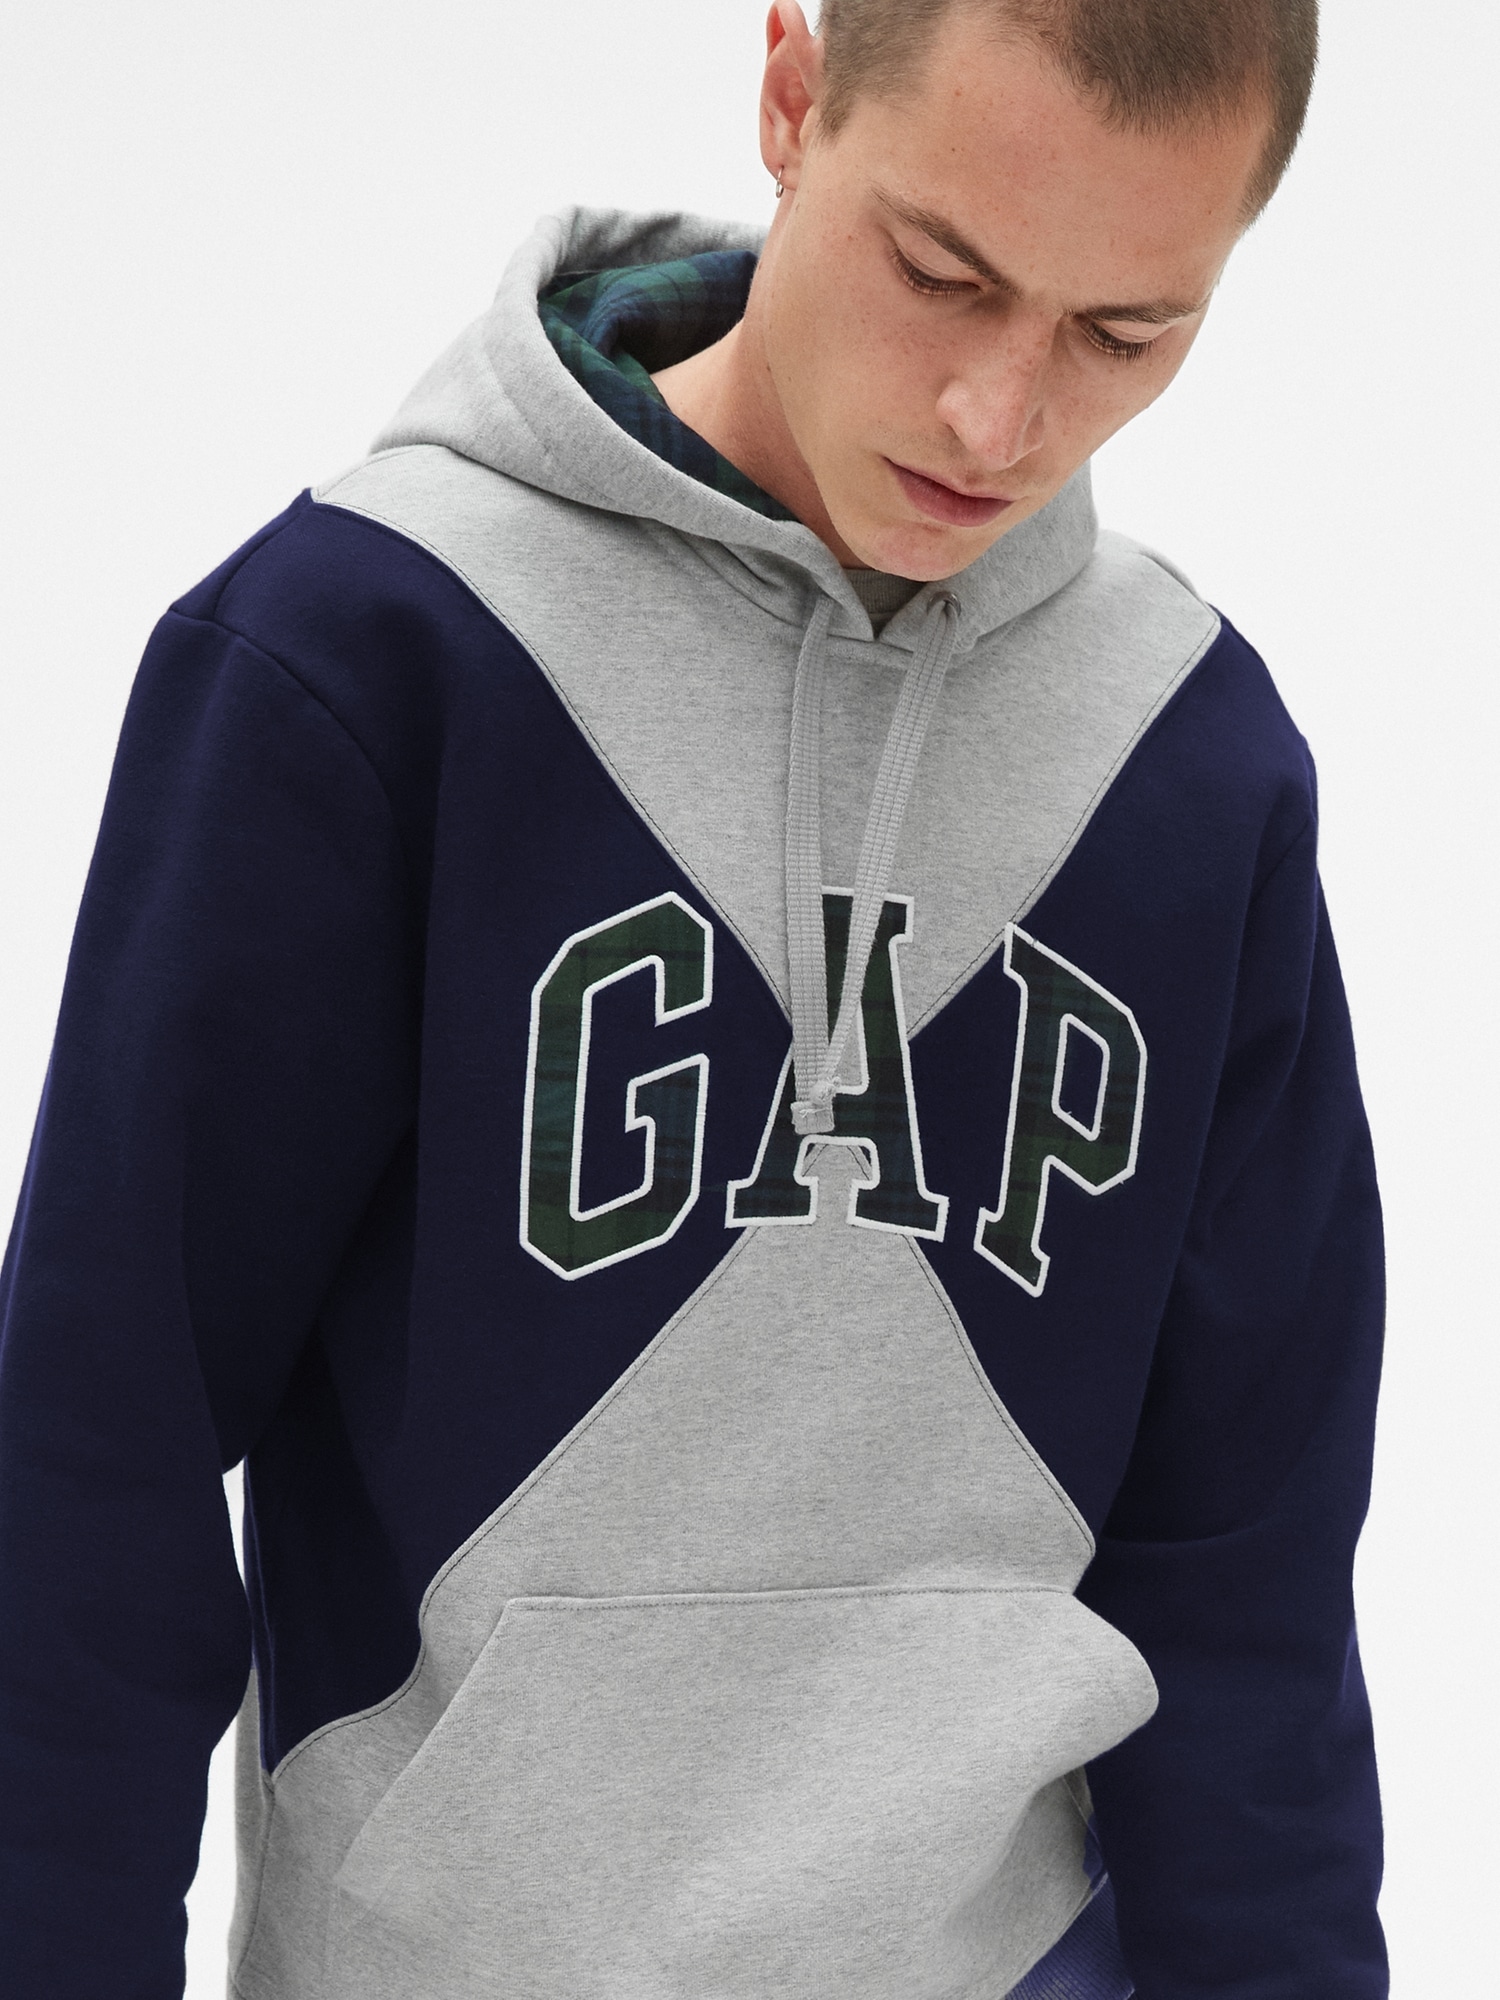 Gap + GQ Opening Ceremony Pullover Hoodie | Gap